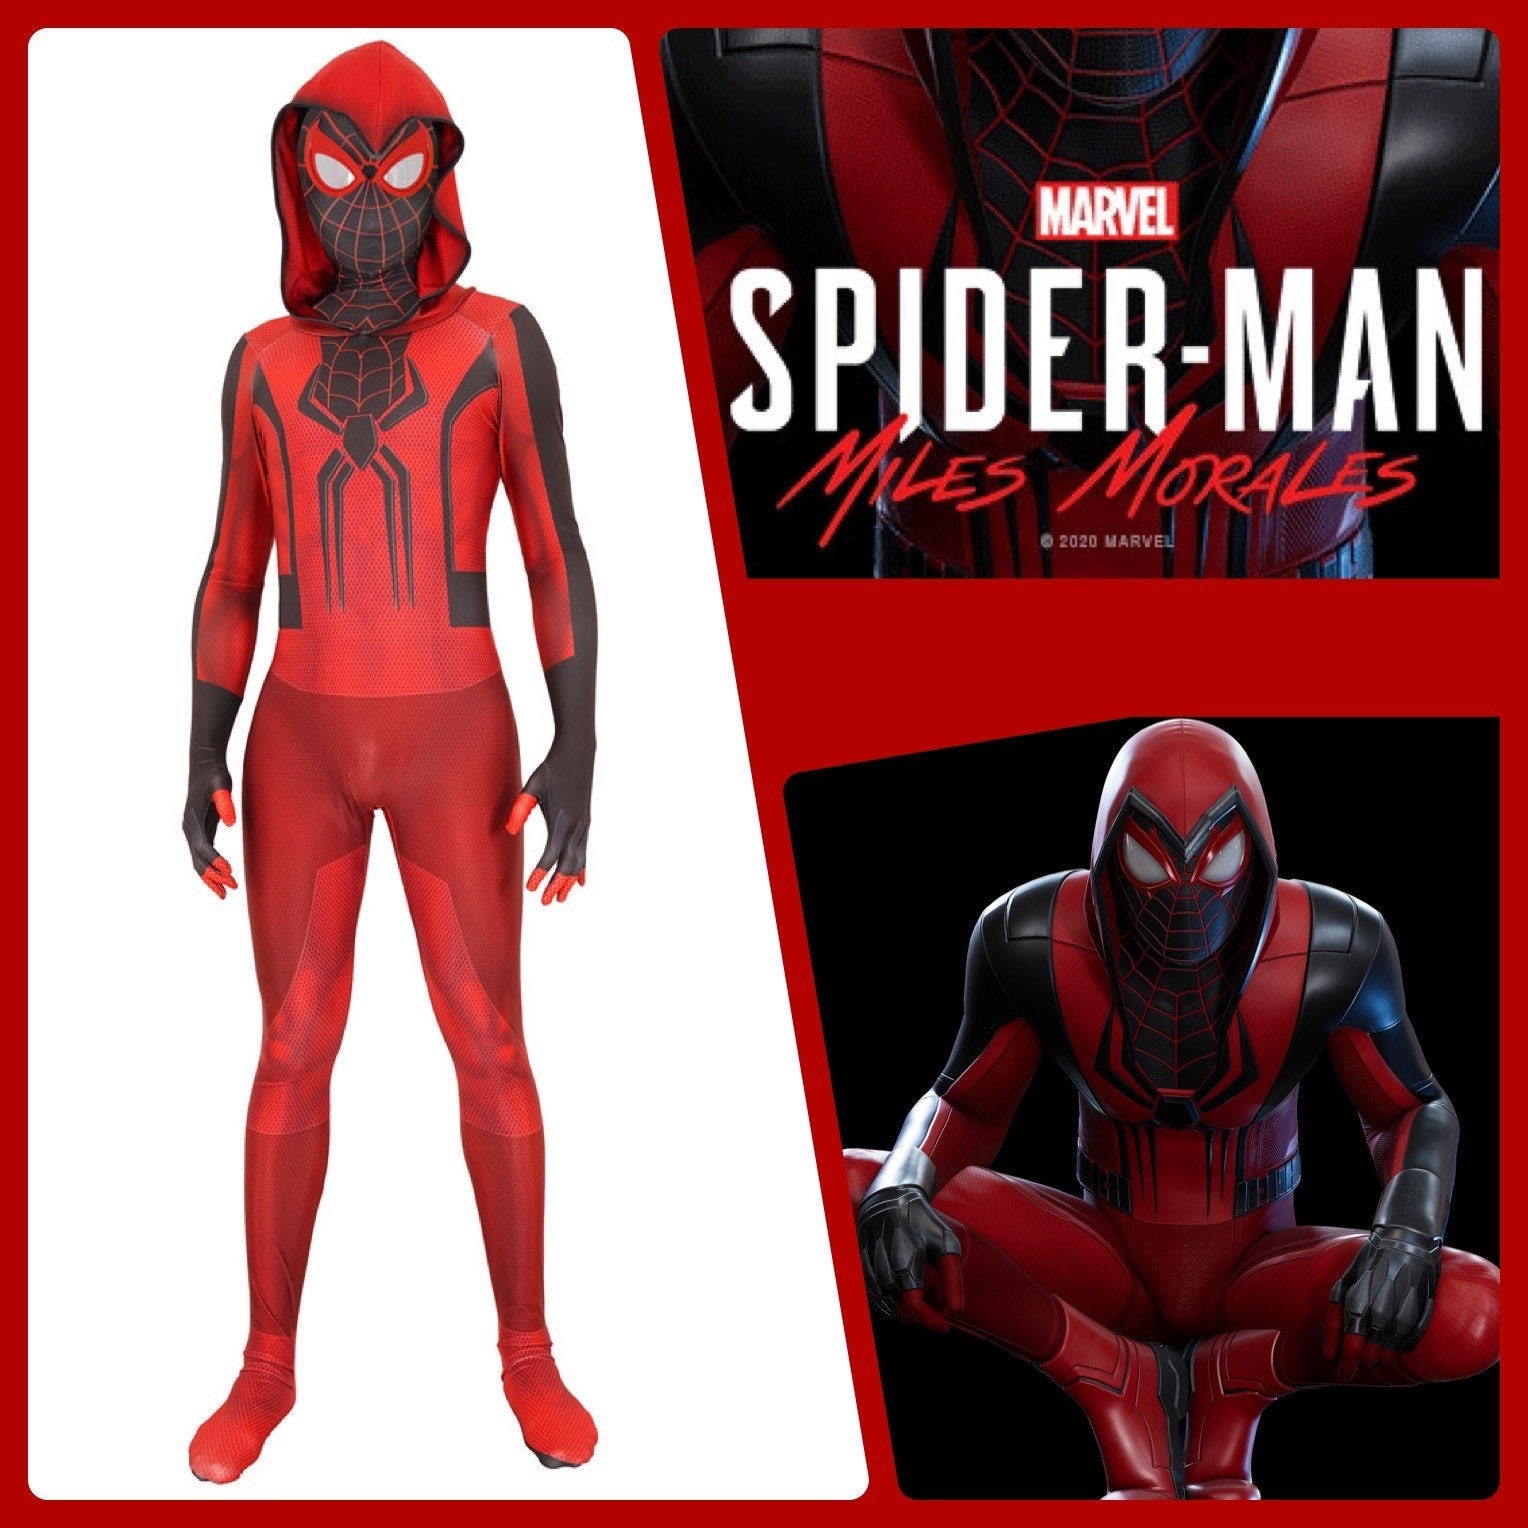 Costume Spiderman Femme, déguisement et cosplay - Spider Shop